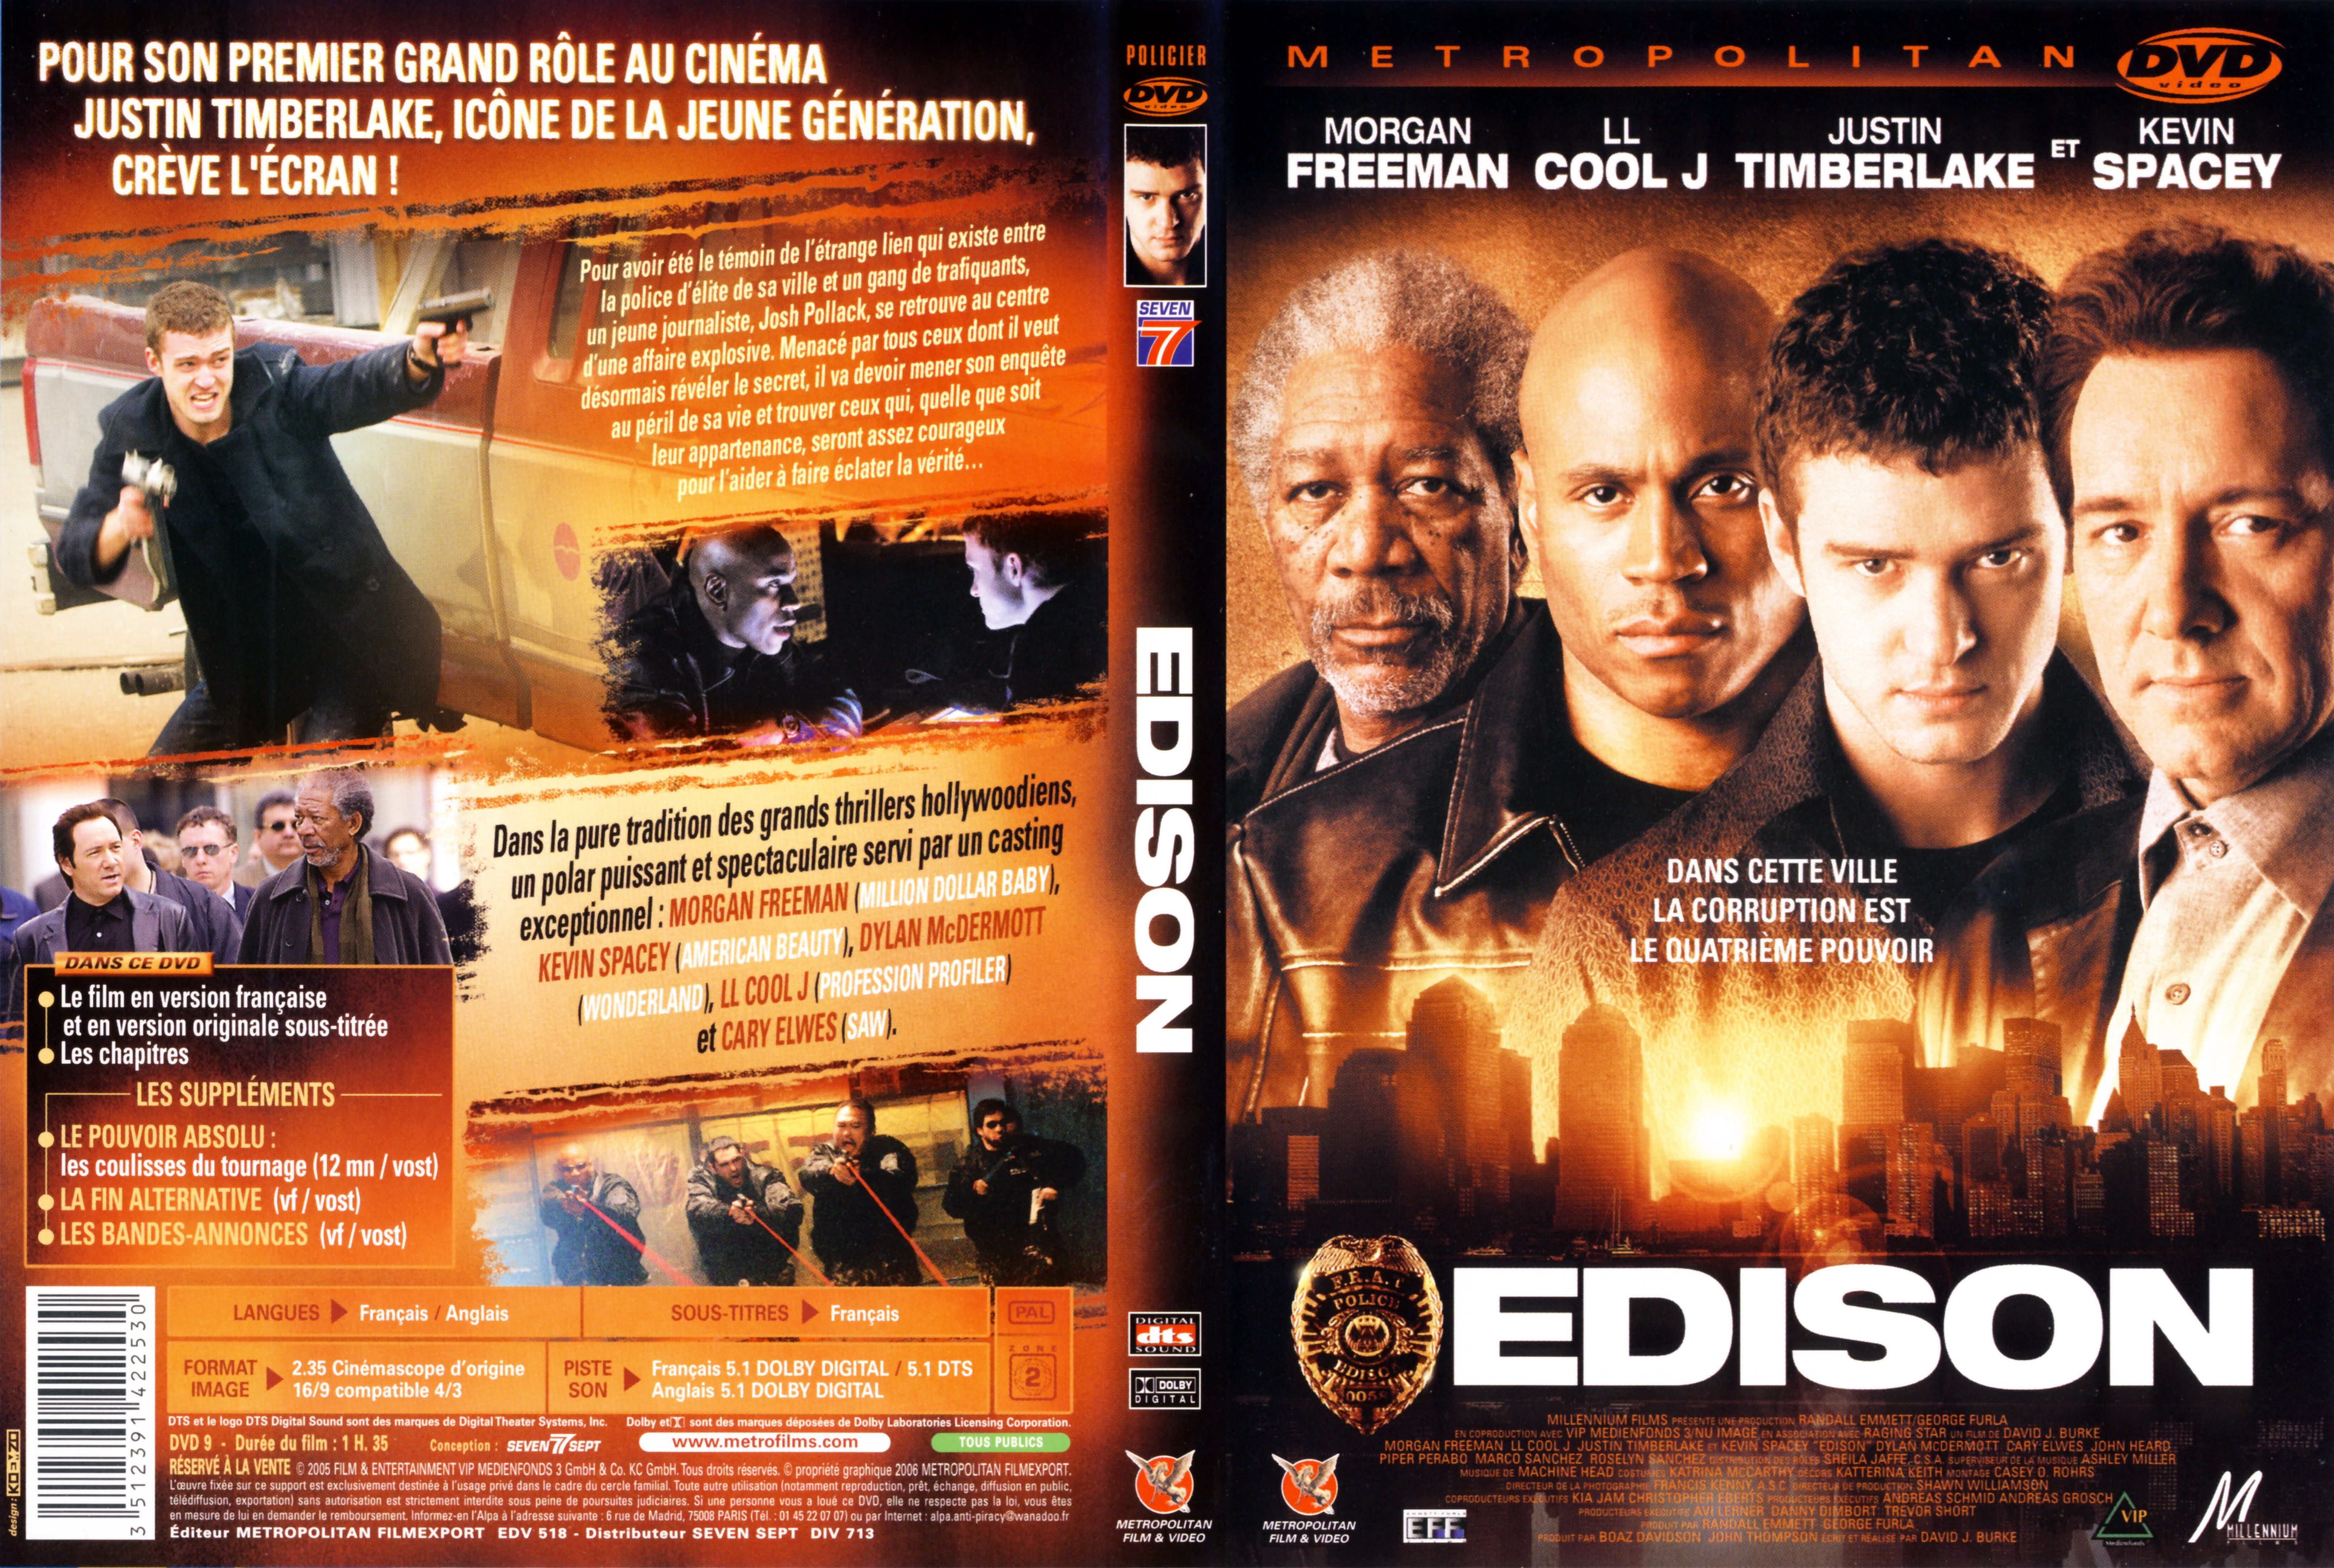 Jaquette DVD Edison v2